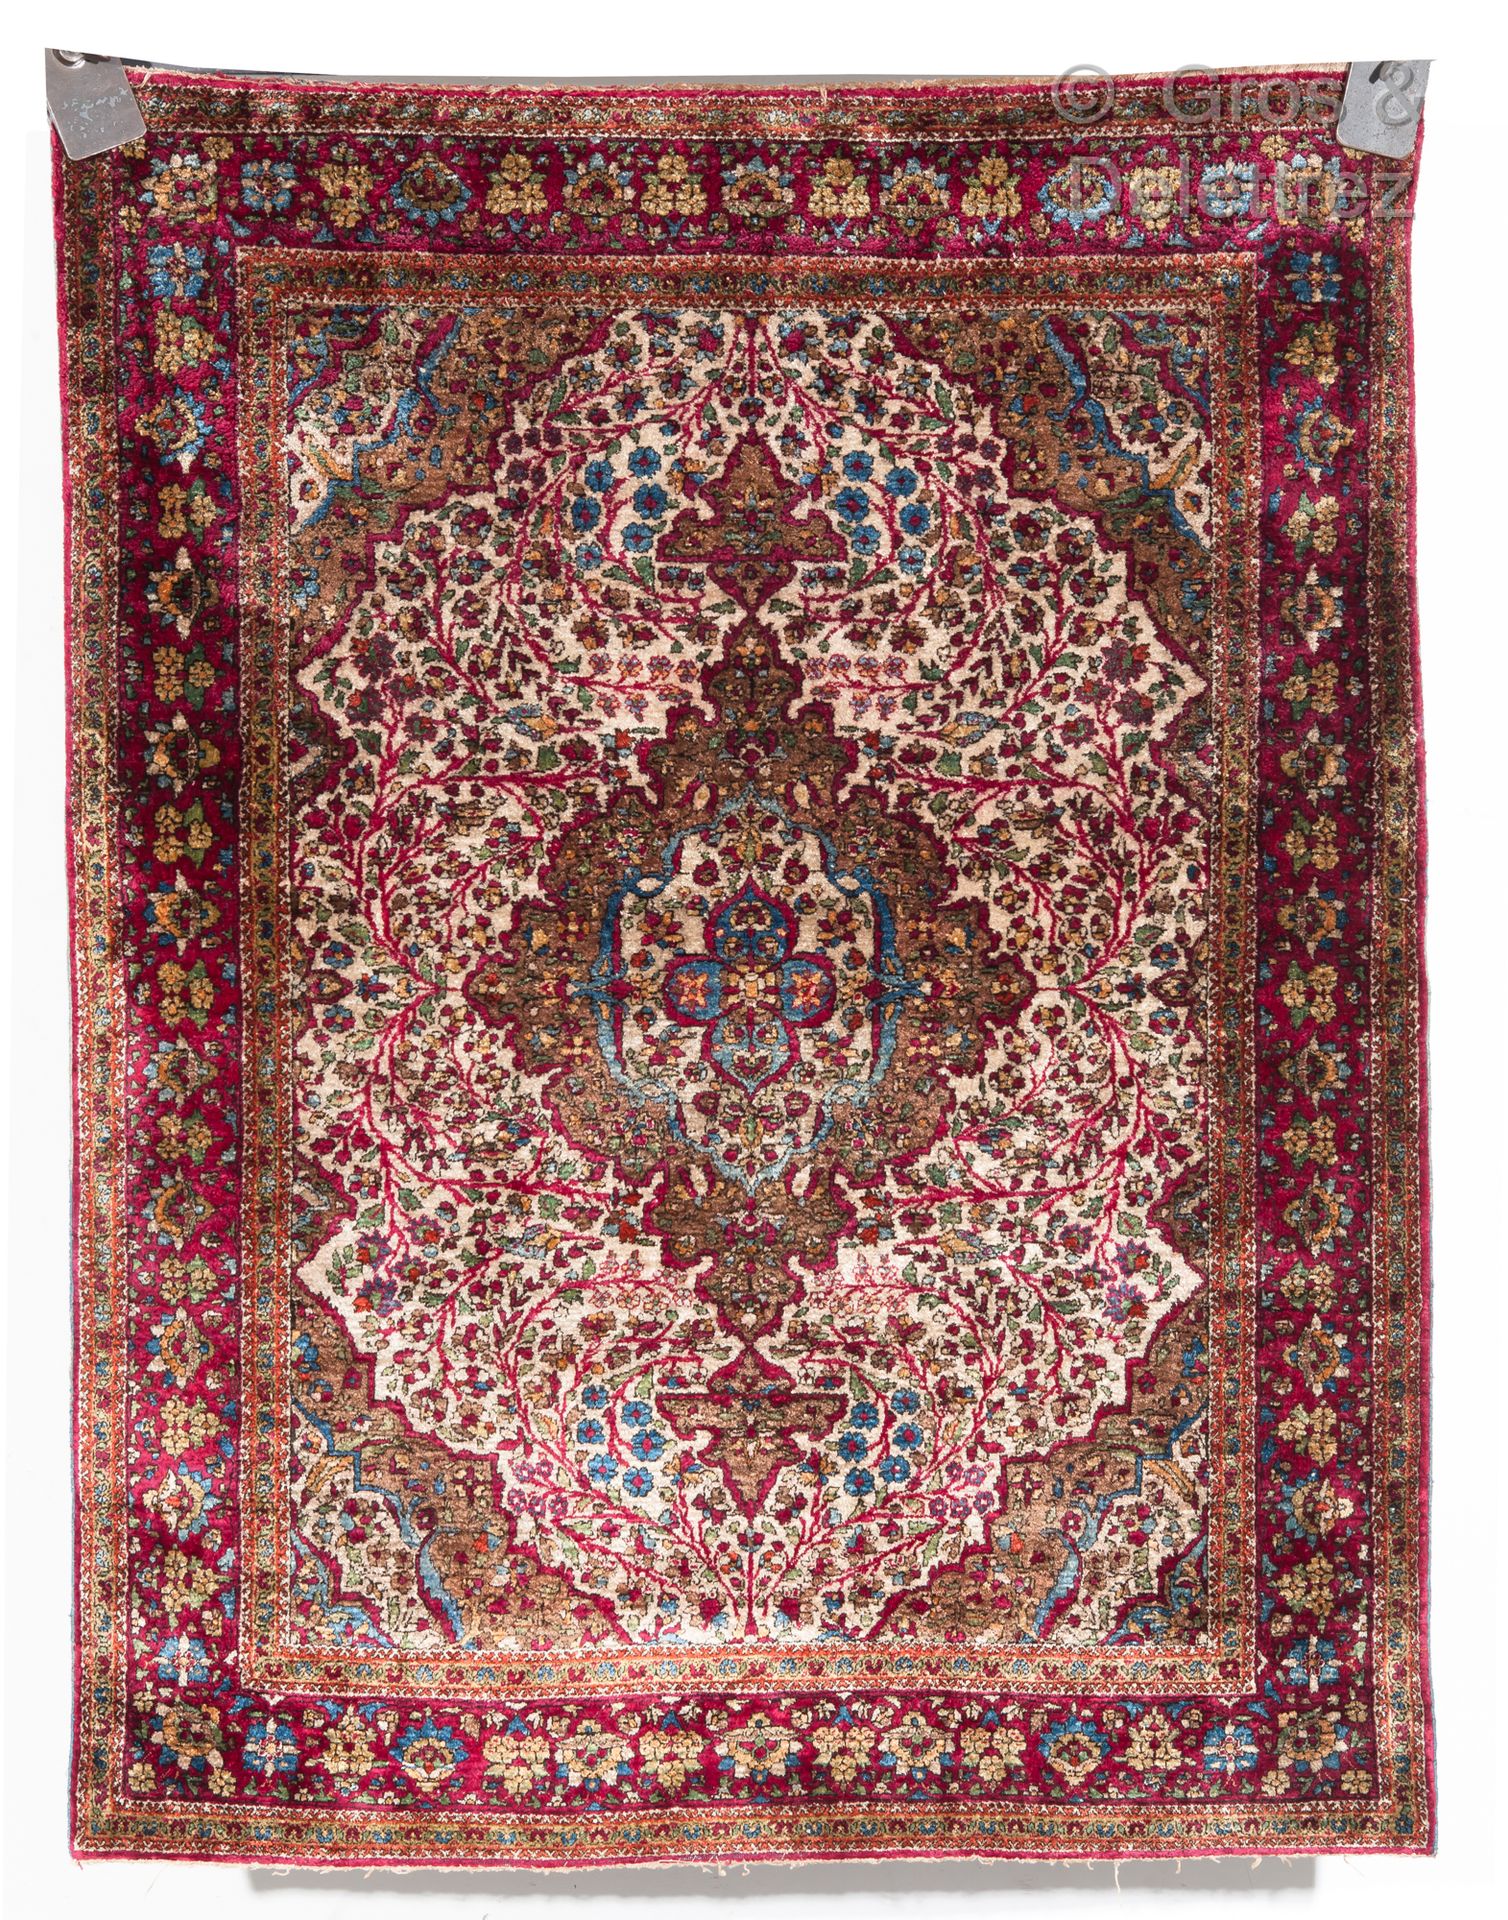 Null Una antigua alfombra de seda Kirman, Irán

Una fina alfombra antigua de sed&hellip;